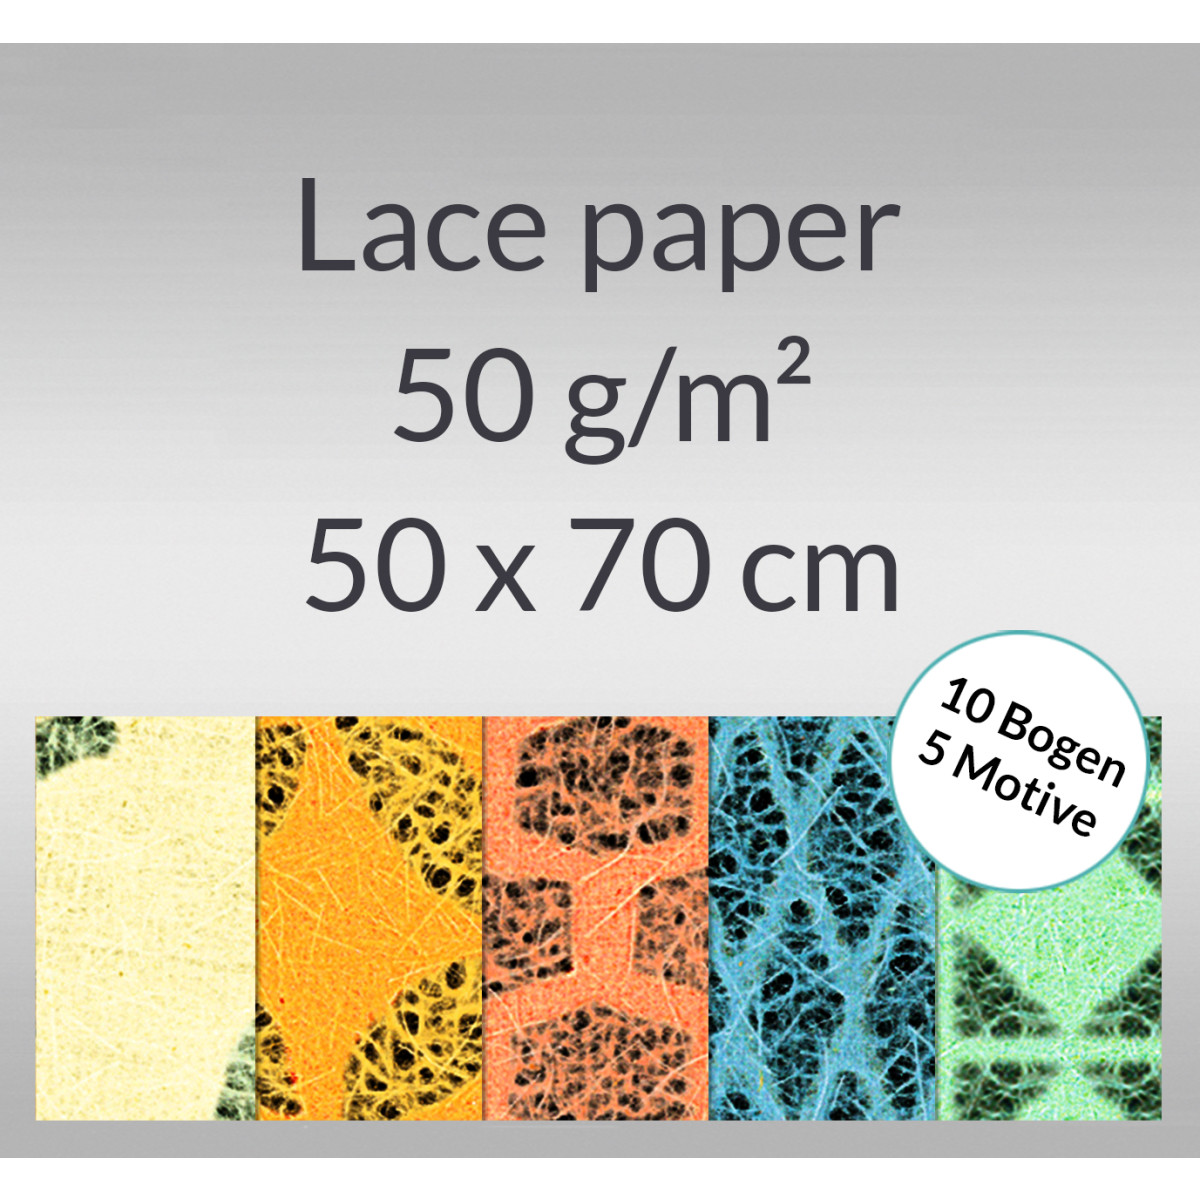 Lace paper 50 g/qm 50 x 70 cm sortiert - 10 Bogen sortiert